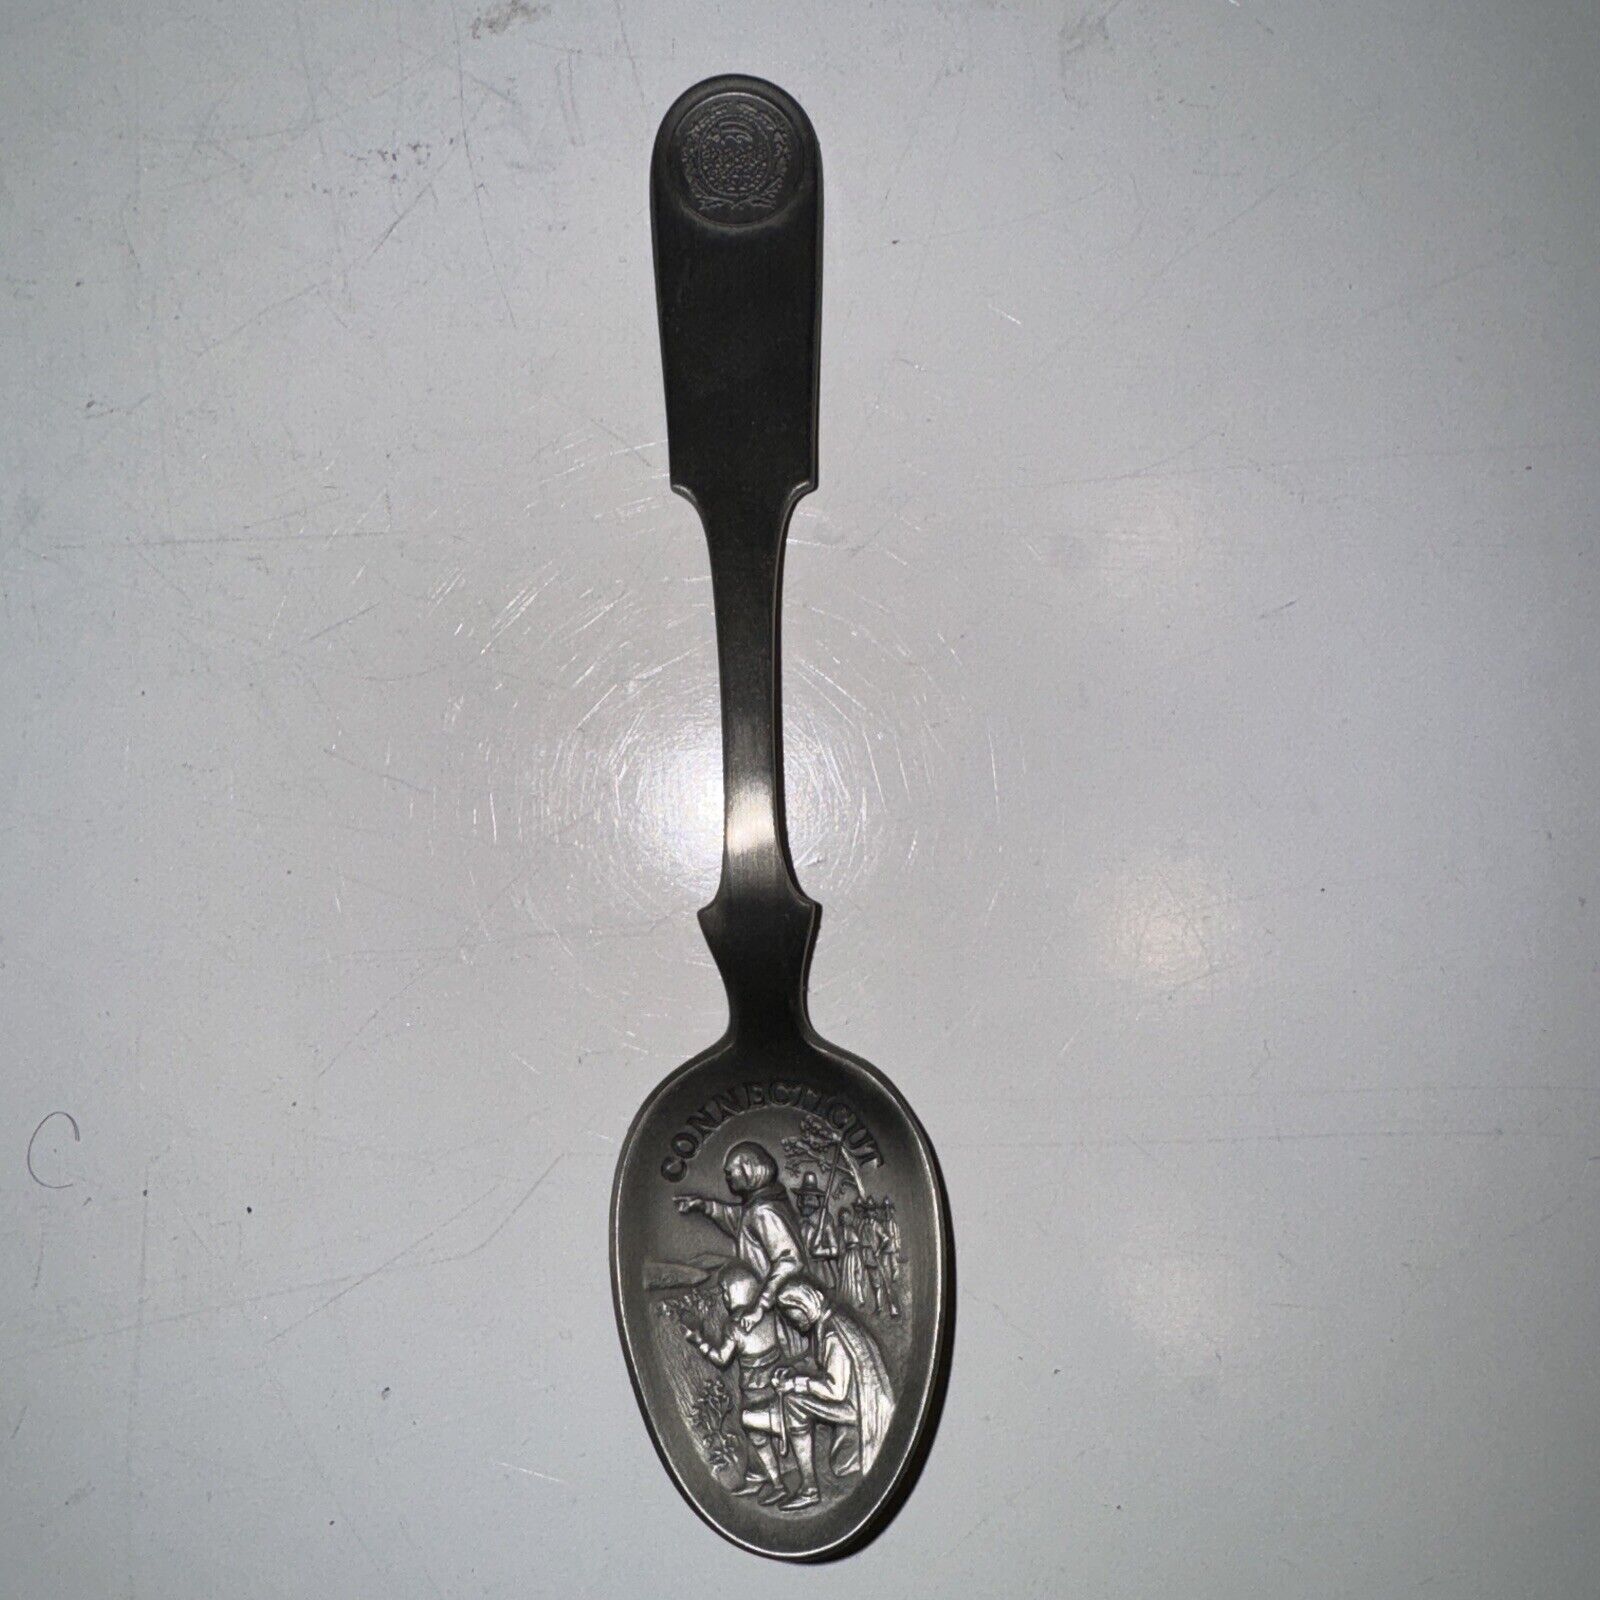 VTG 1975 Franklin Mint American Colonies Decorative Spoon CONNECTICUT Pewter